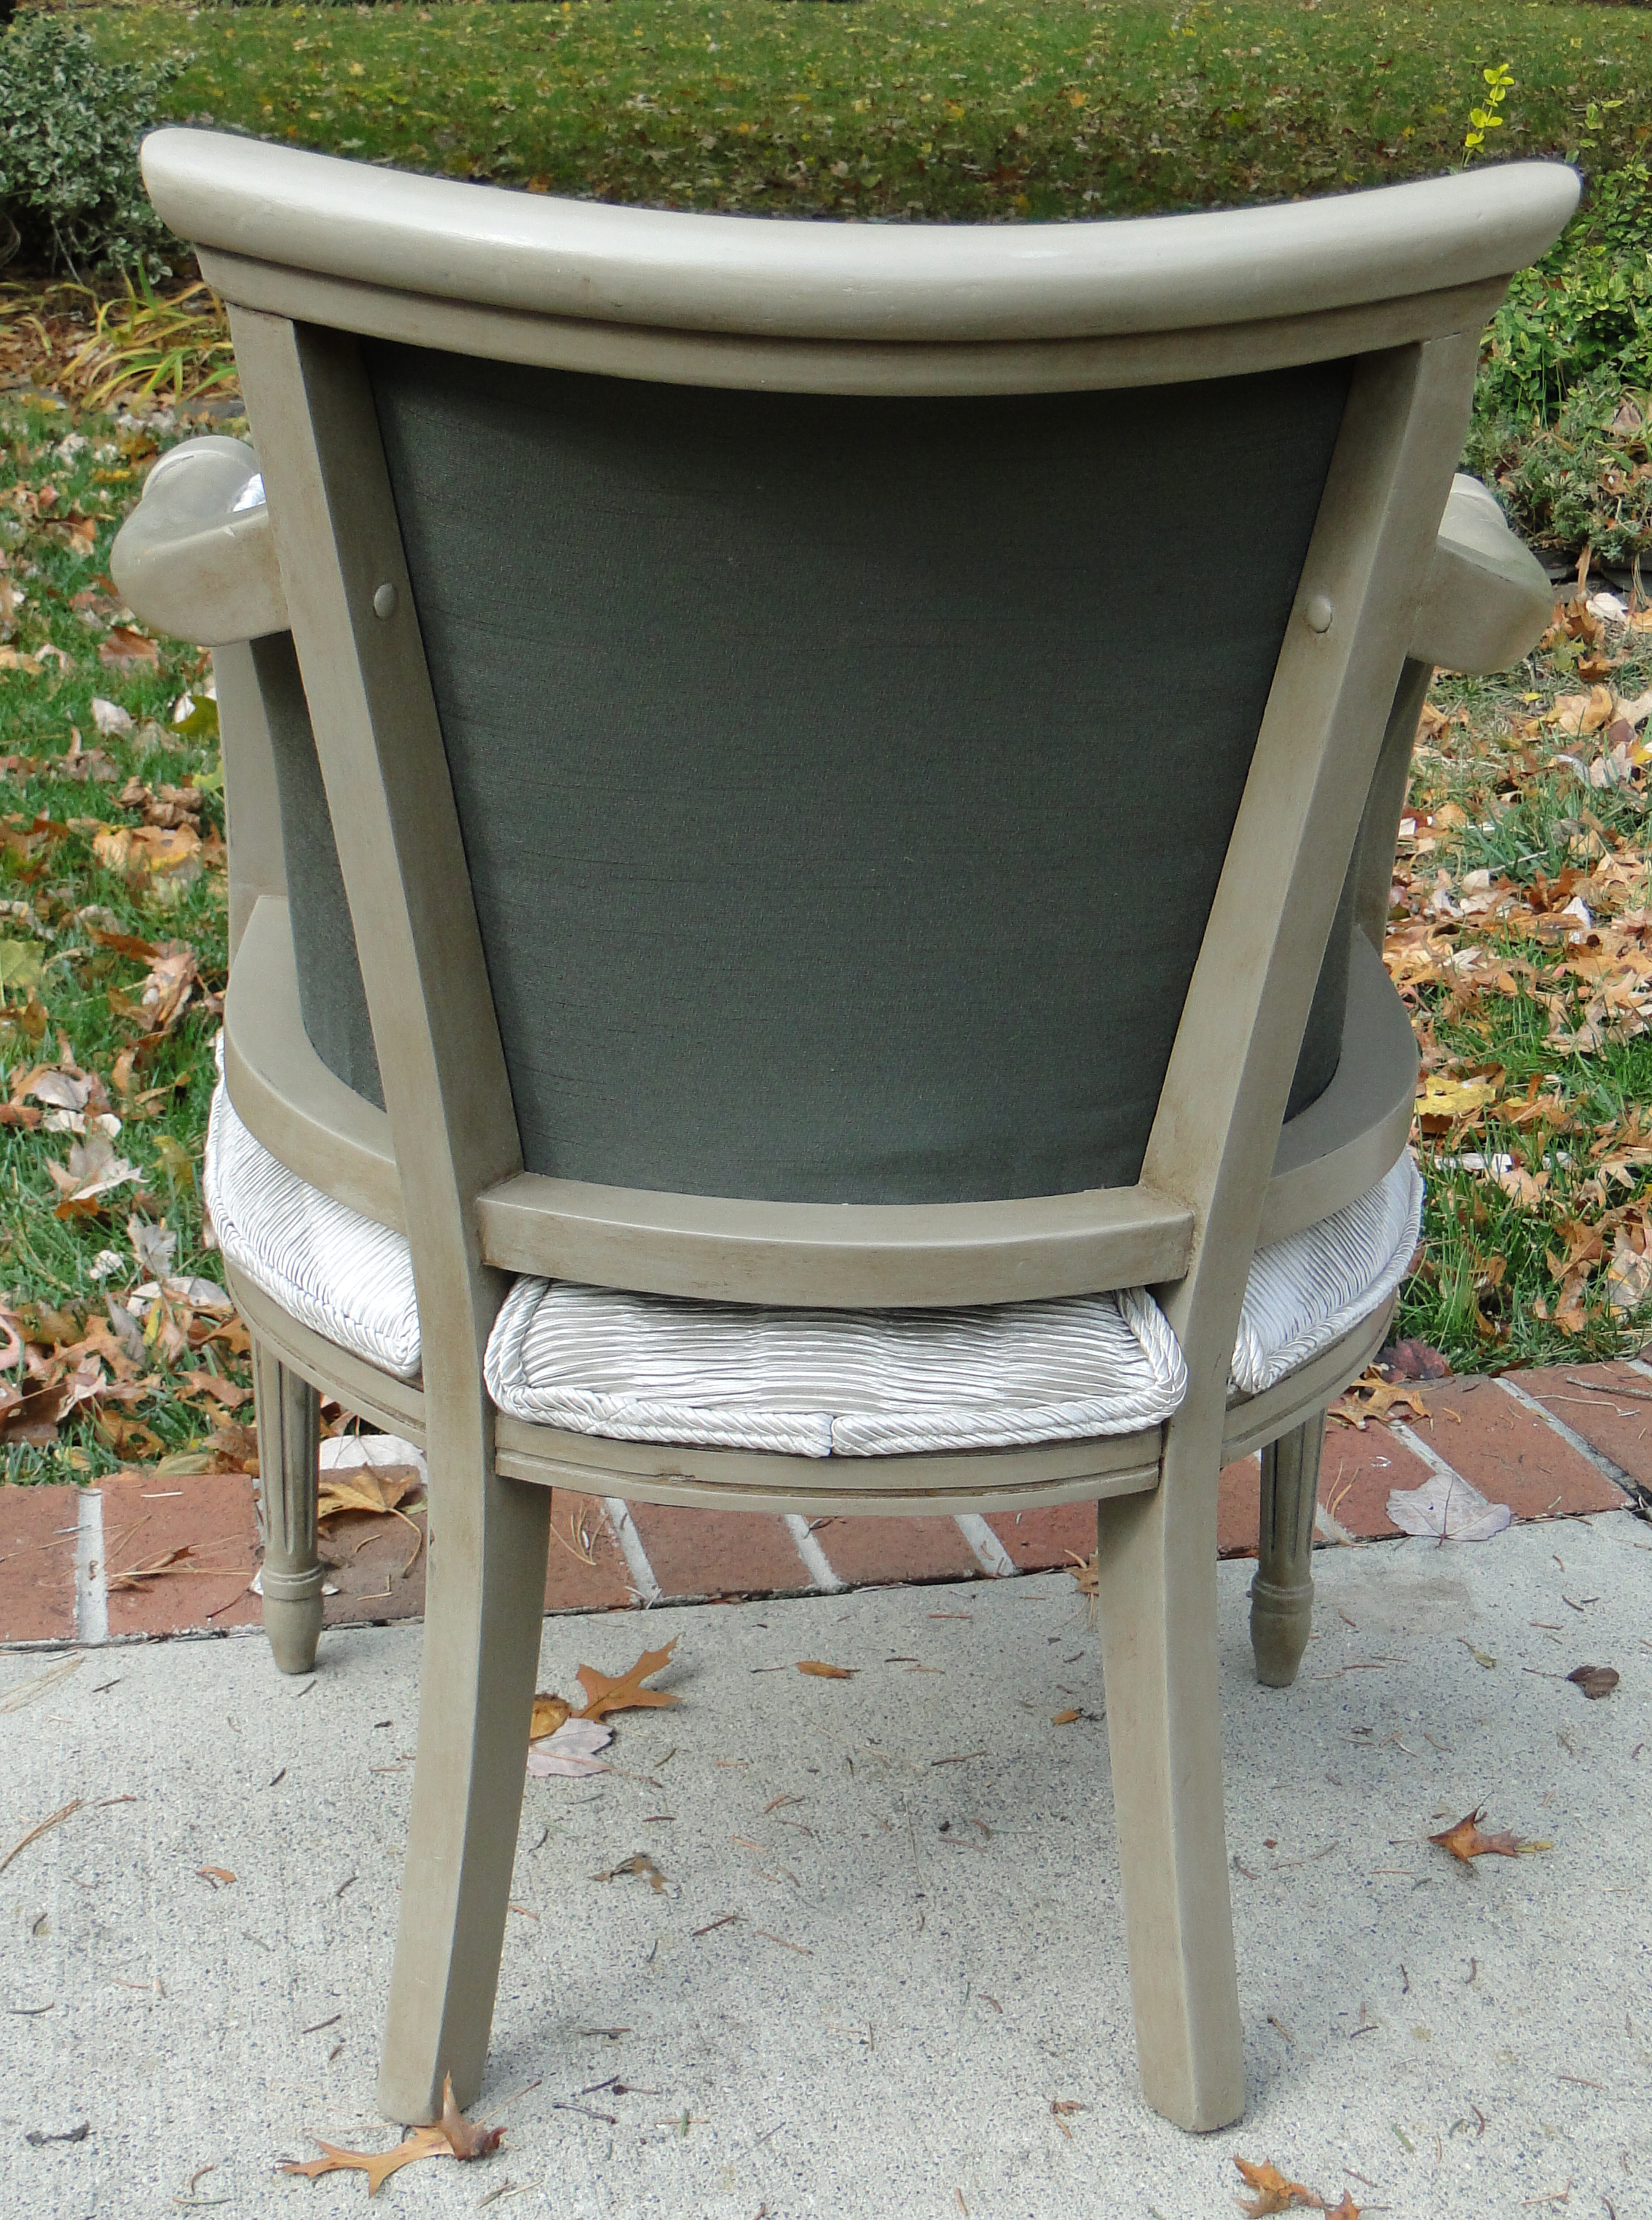 Rear view of chair highlighting khaki fabric